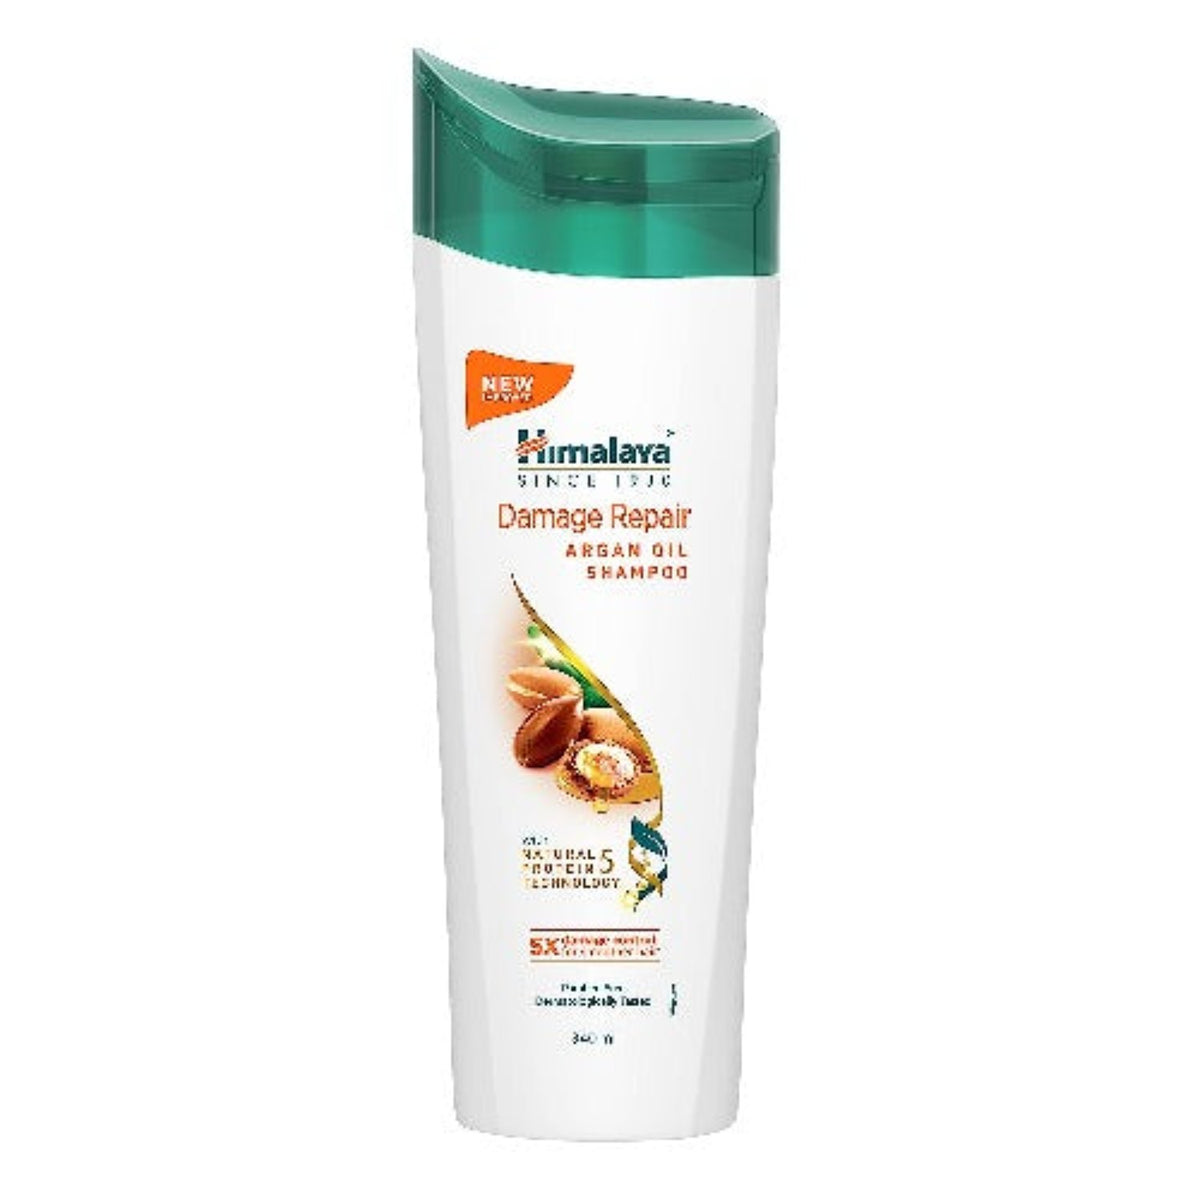 Himalaya Herbal Ayurvedic Personal Care Damage Repair Arganöl 5X Damage Control für glatteres Haar Shampoo